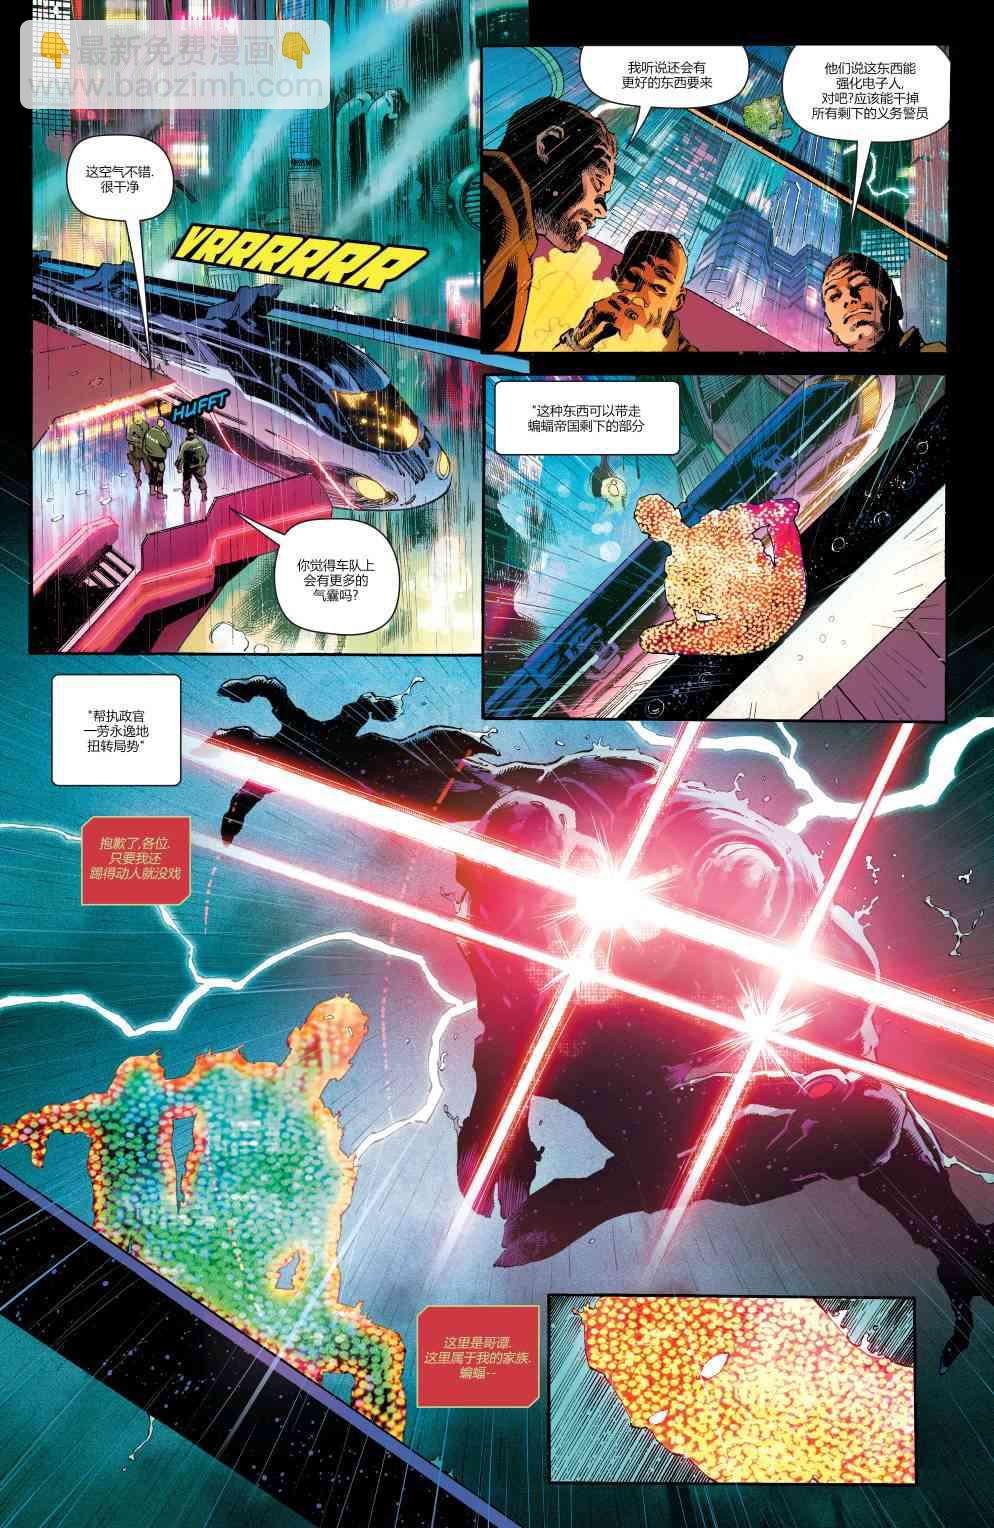 DC未來態 - 羅賓不朽傳奇#1 - 2